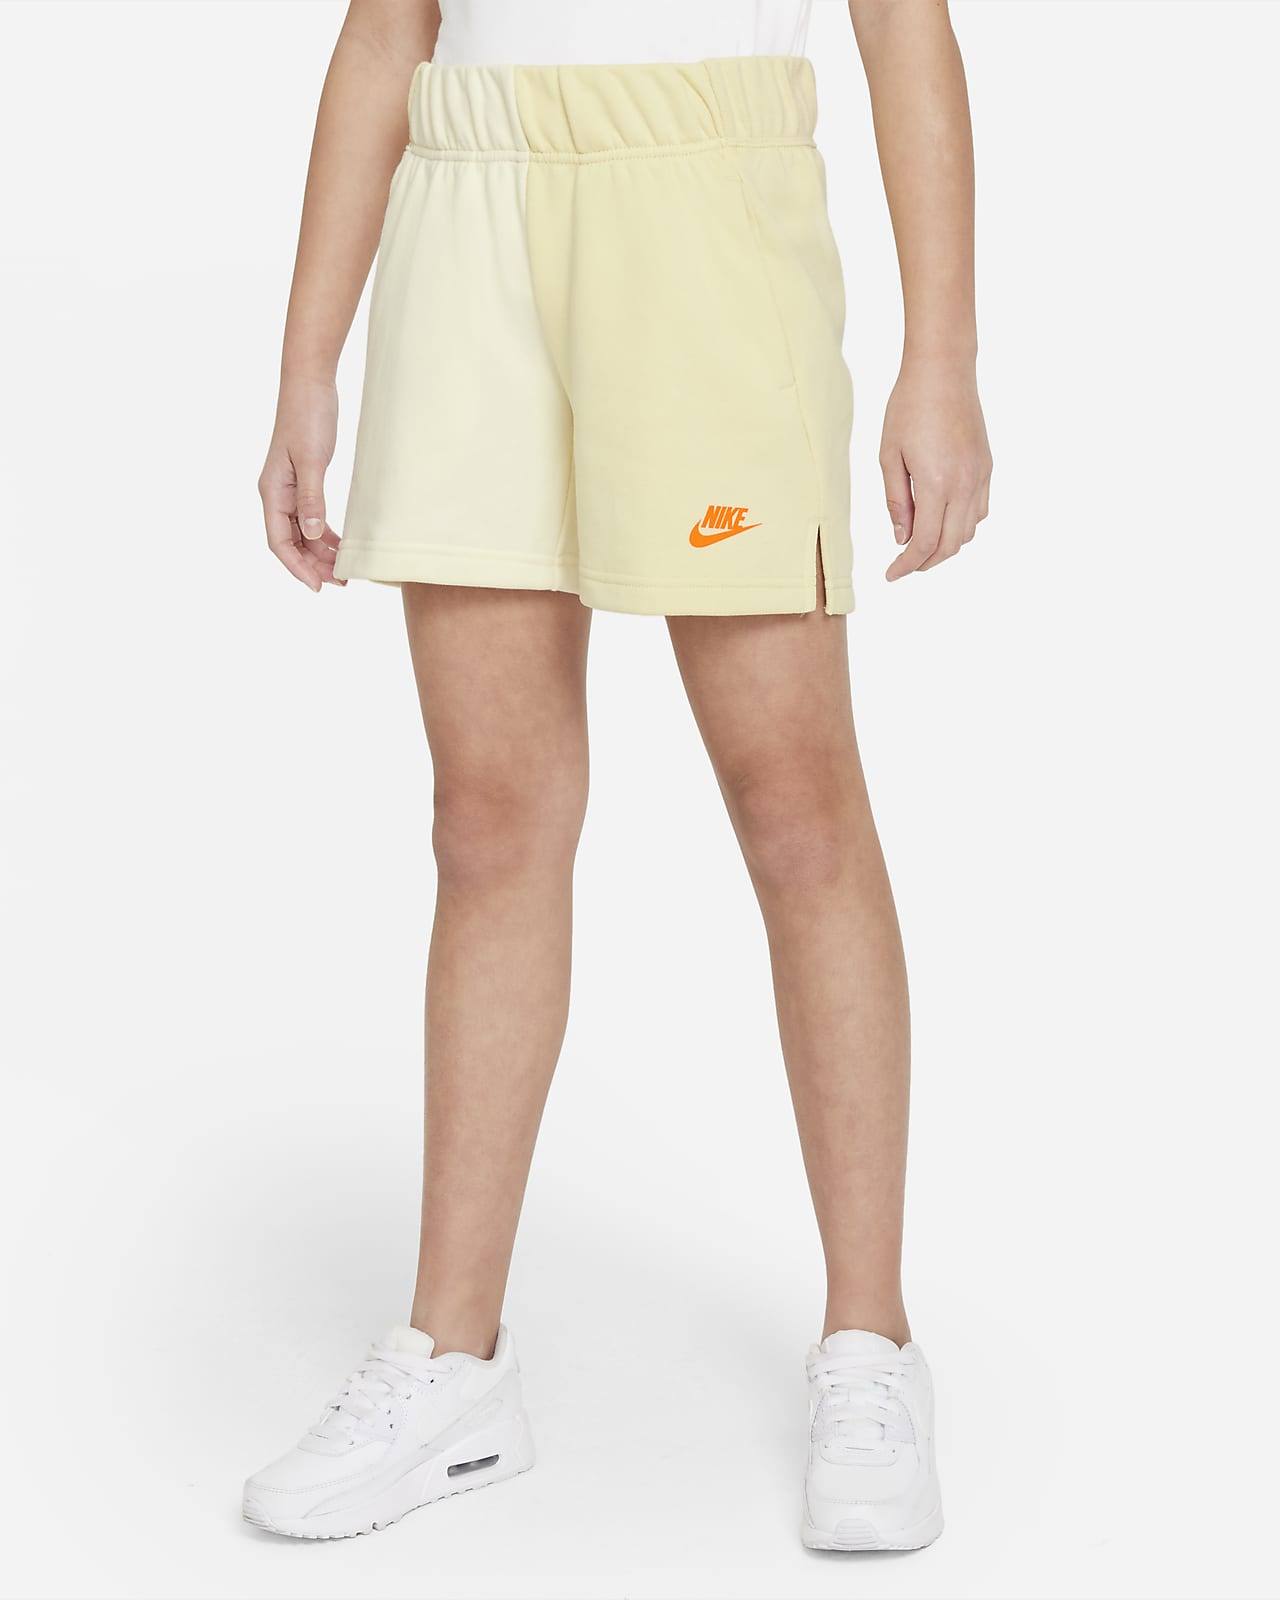 Shorts i frotté Nike Sportswear för ungdom (tjejer)